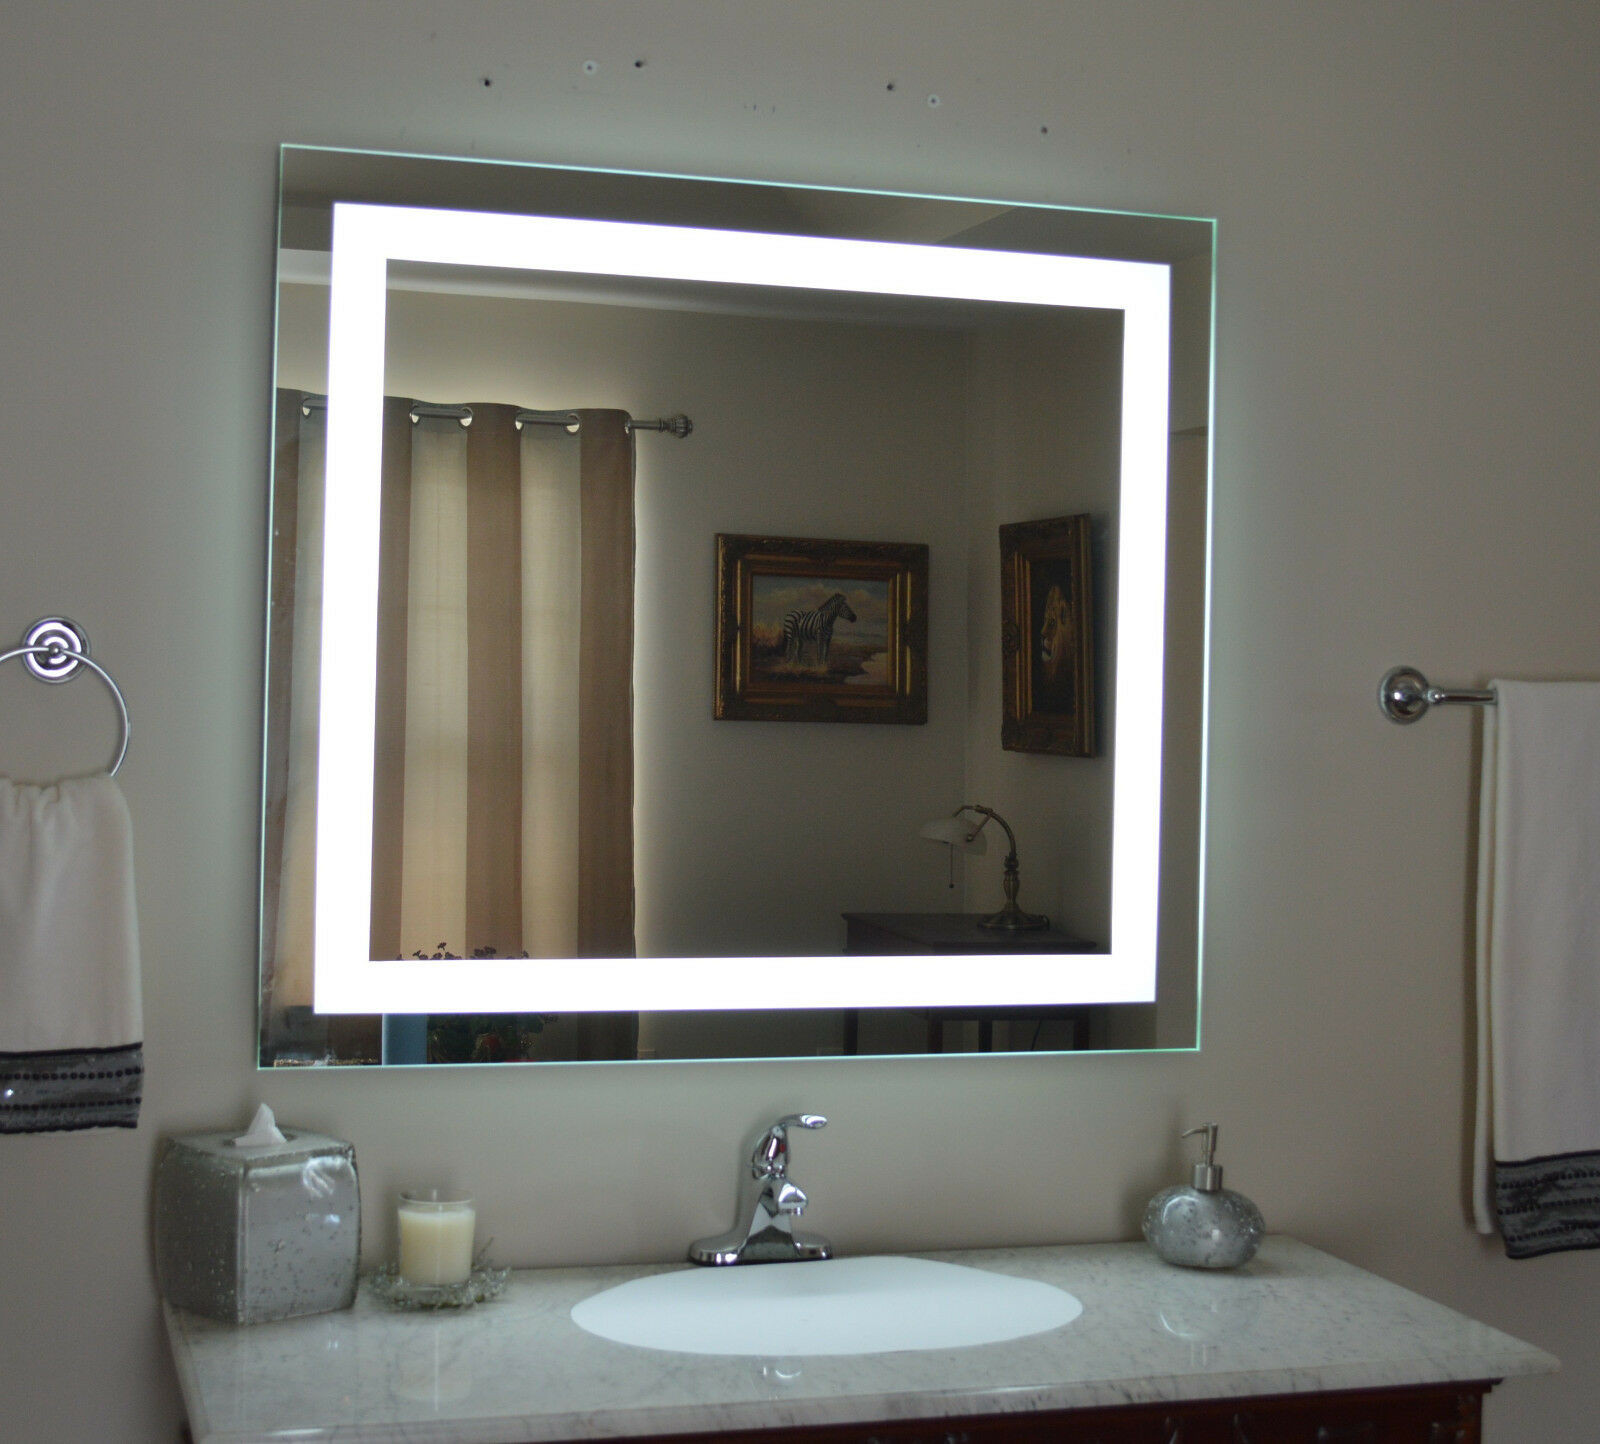 Bathroom Vanity With Mirror
 Lighted bathroom vanity mirror led wall mounted 48